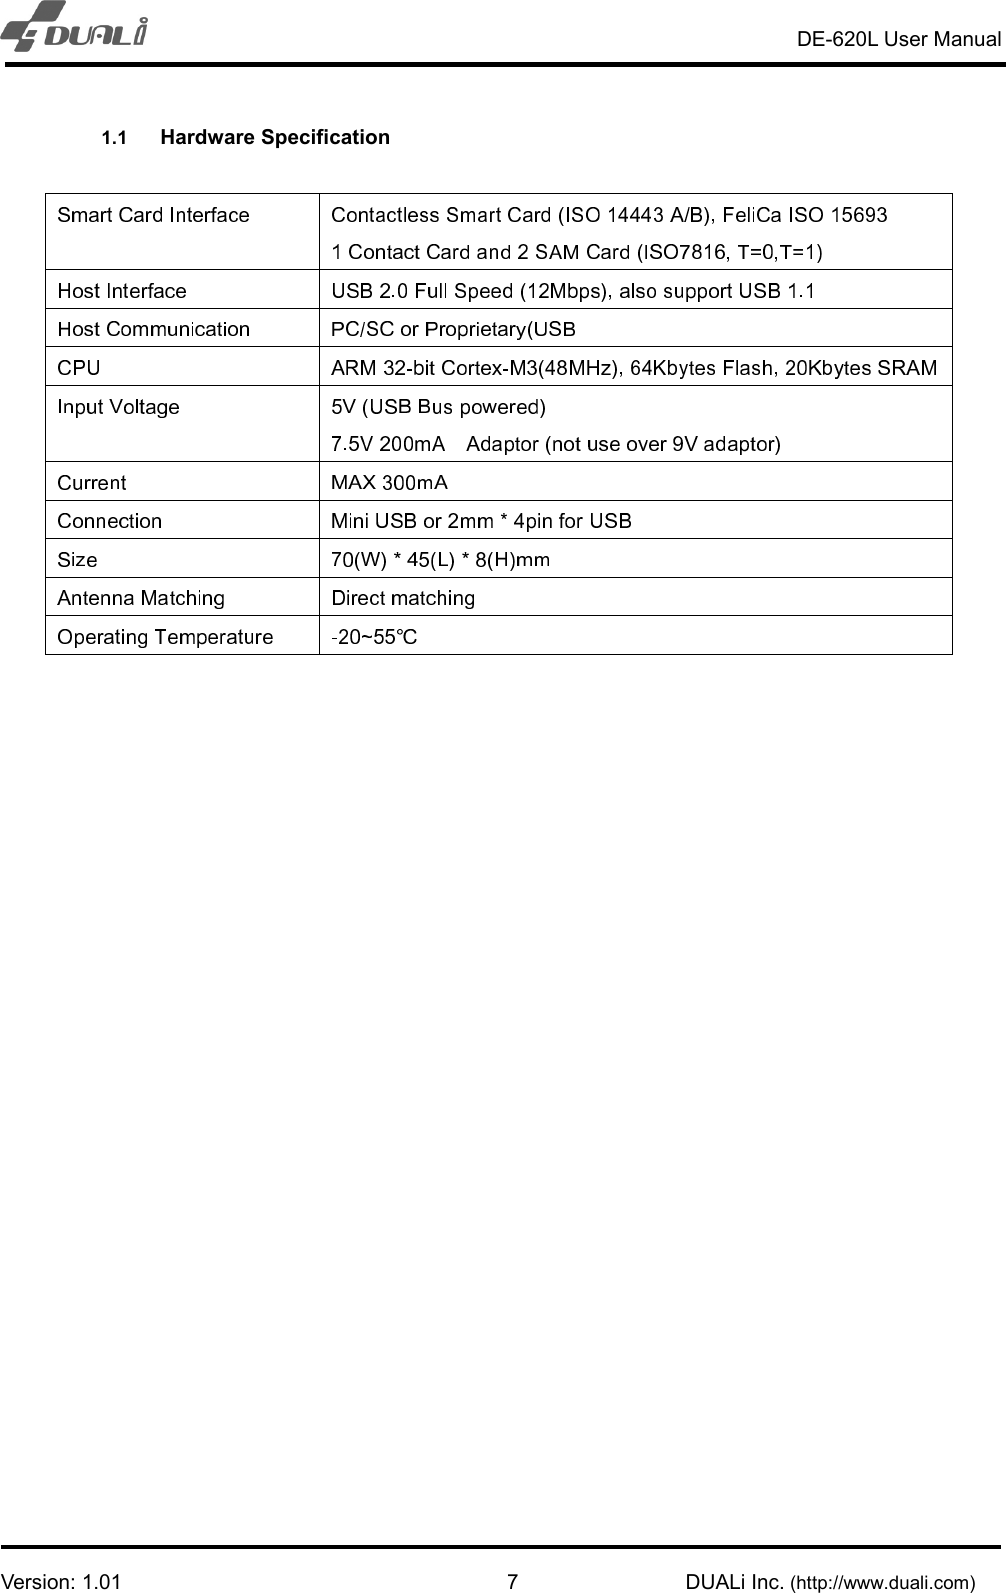   DE-620L User Manual  Version: 1.01                                                                                                            DUALi Inc. (http://www.duali.com) 71.1 Hardware Specification 